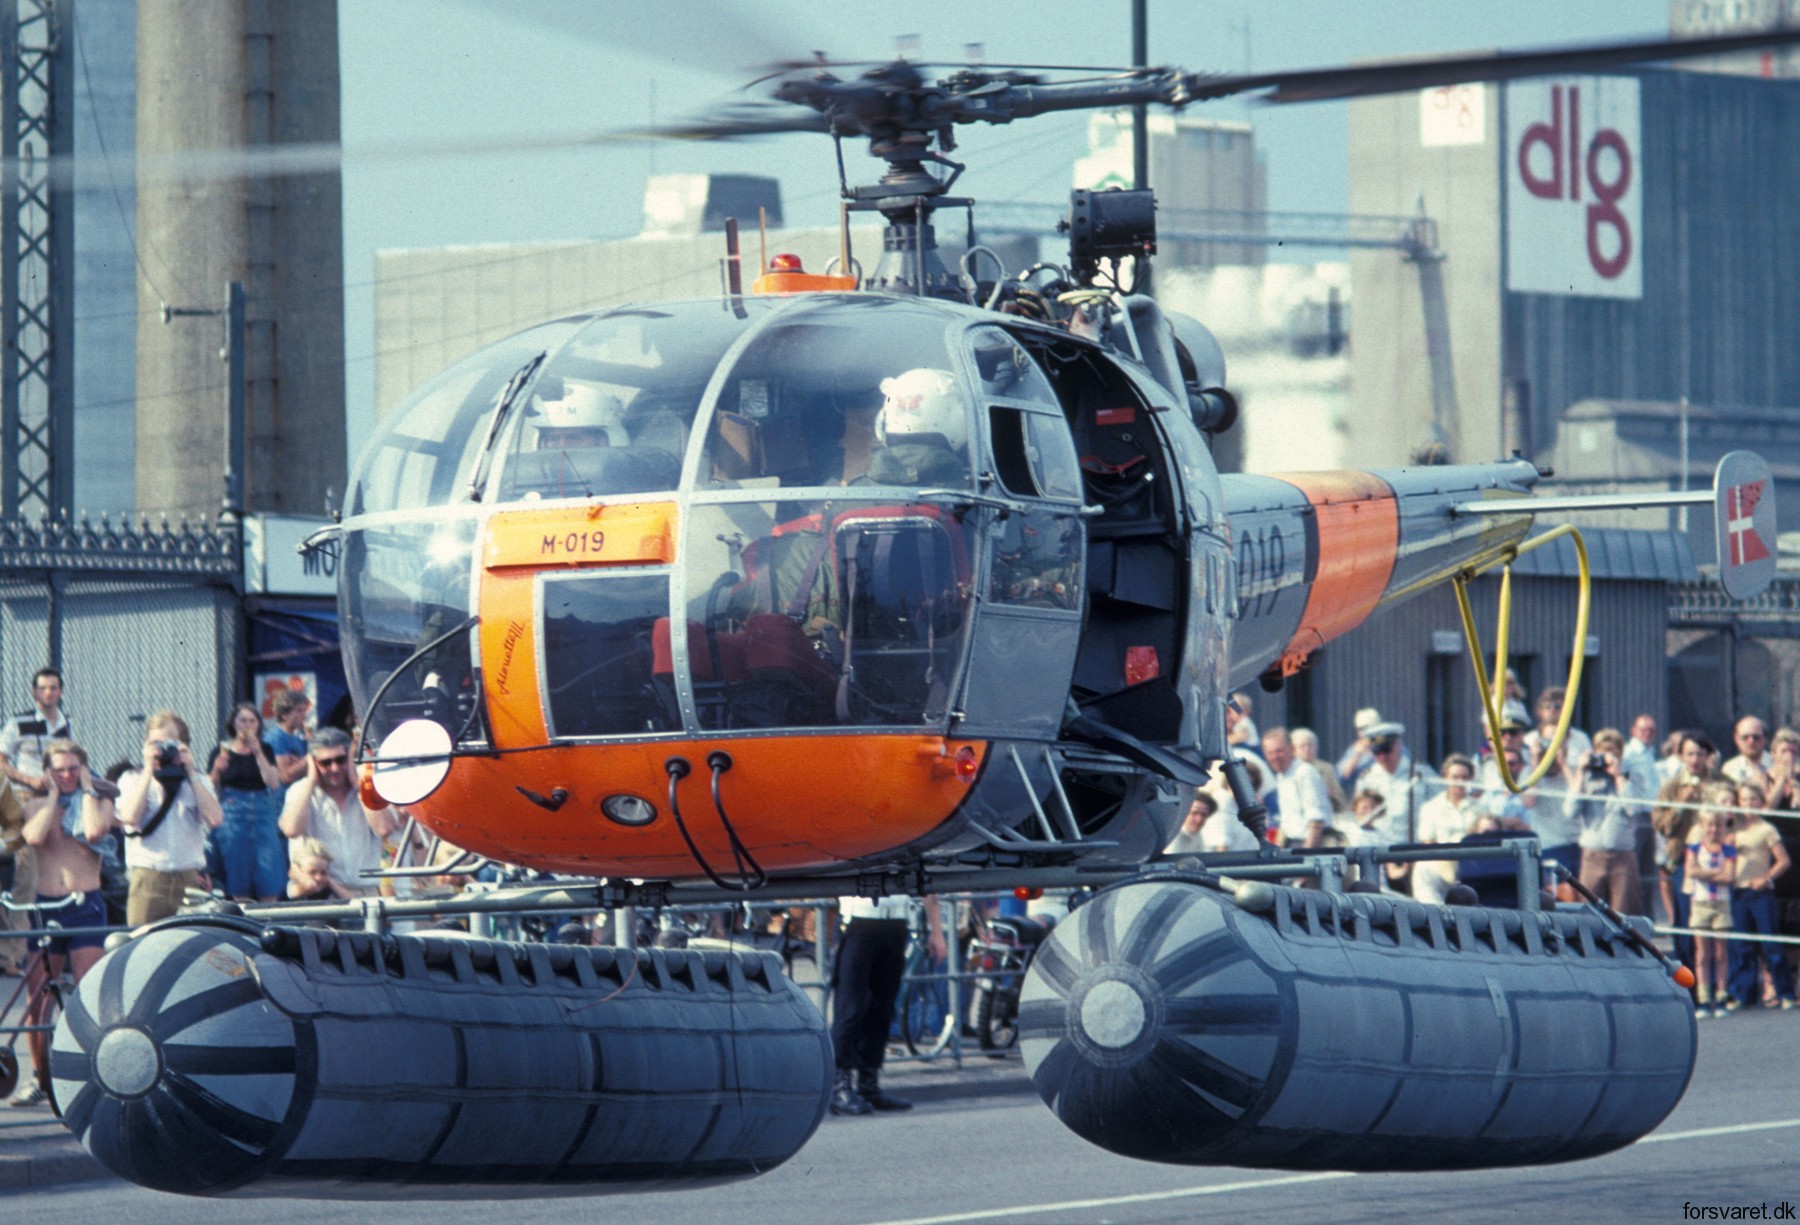 sa 316b alouette iii helicopter royal danish navy søværnet kongelige danske marine sud aviation m-019 04